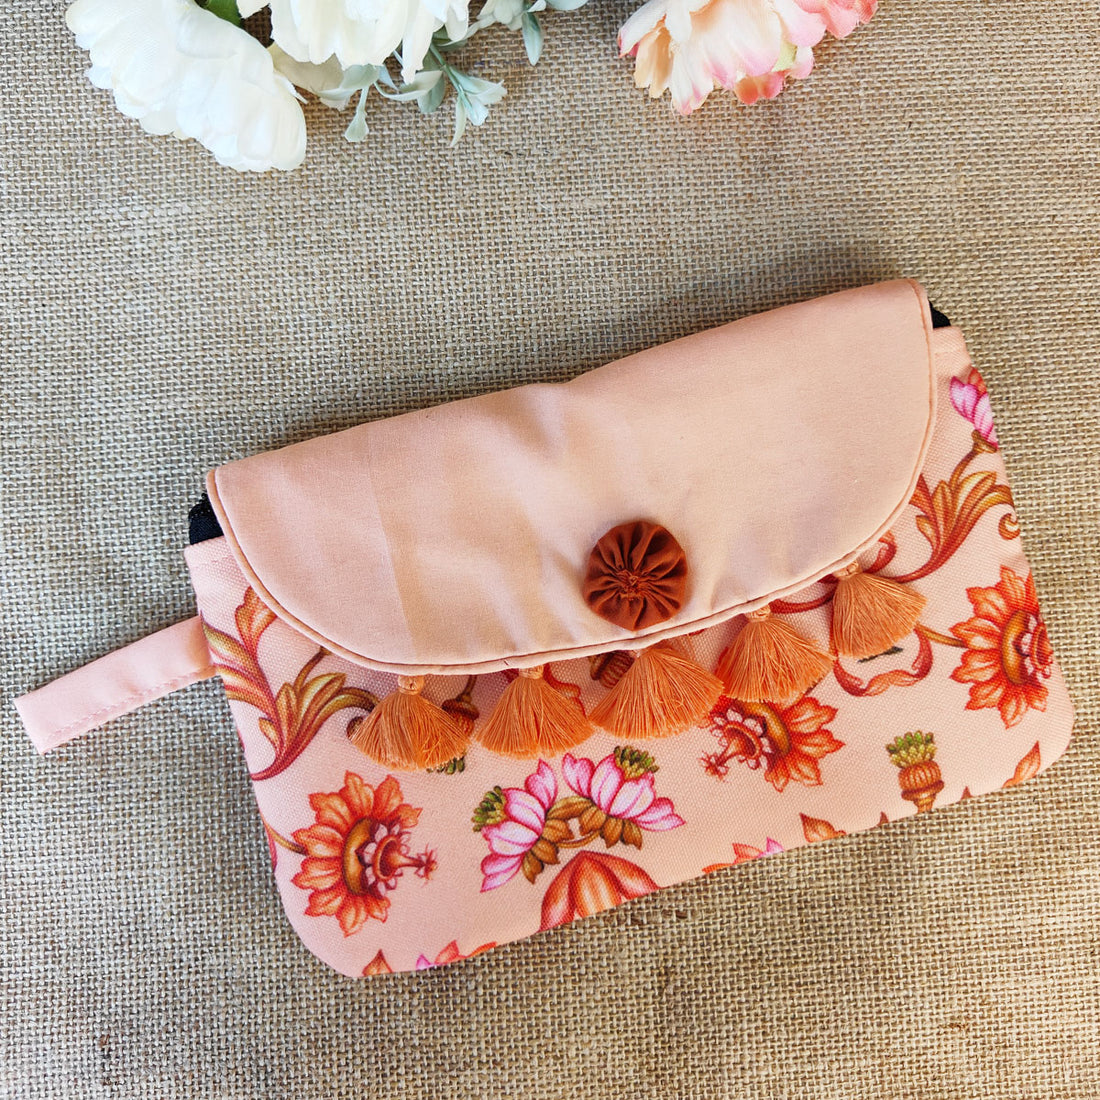 Peach-Pink Mughal Bel Tassel Wallet Combo